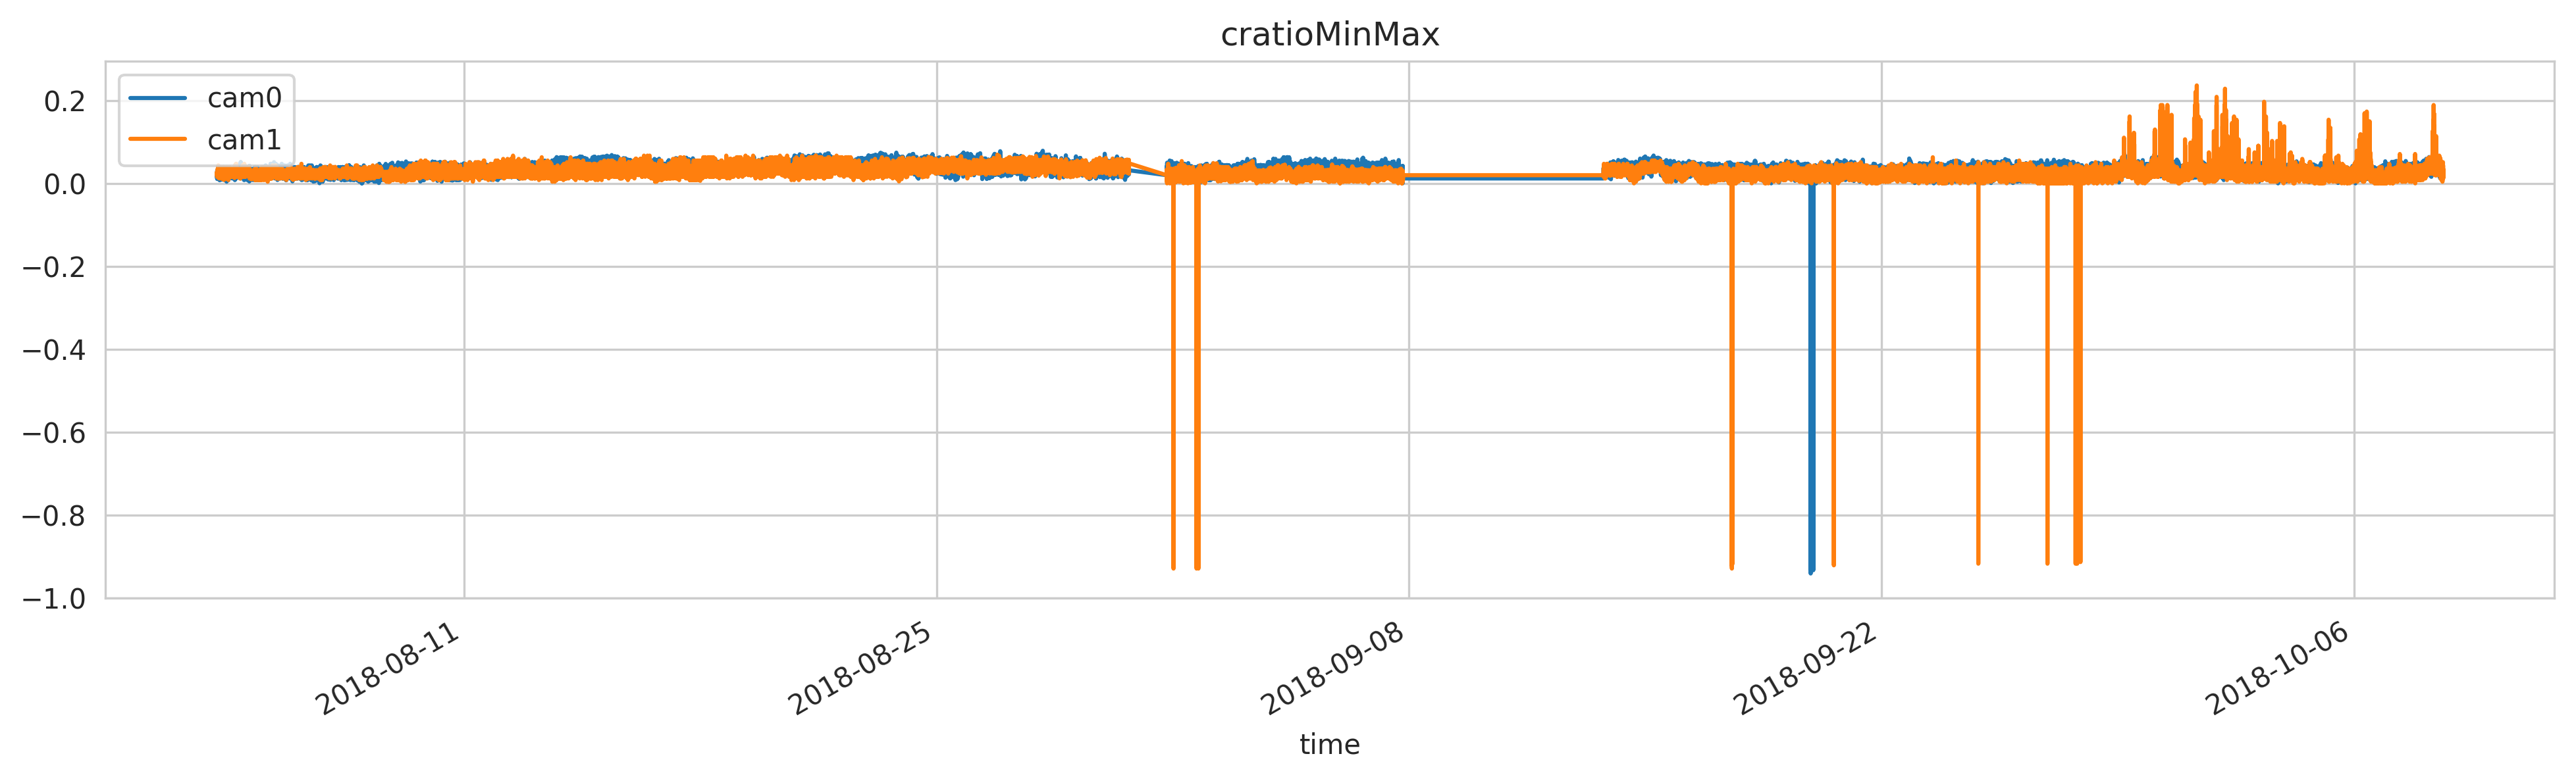 cratioMinMax_metrics live preview